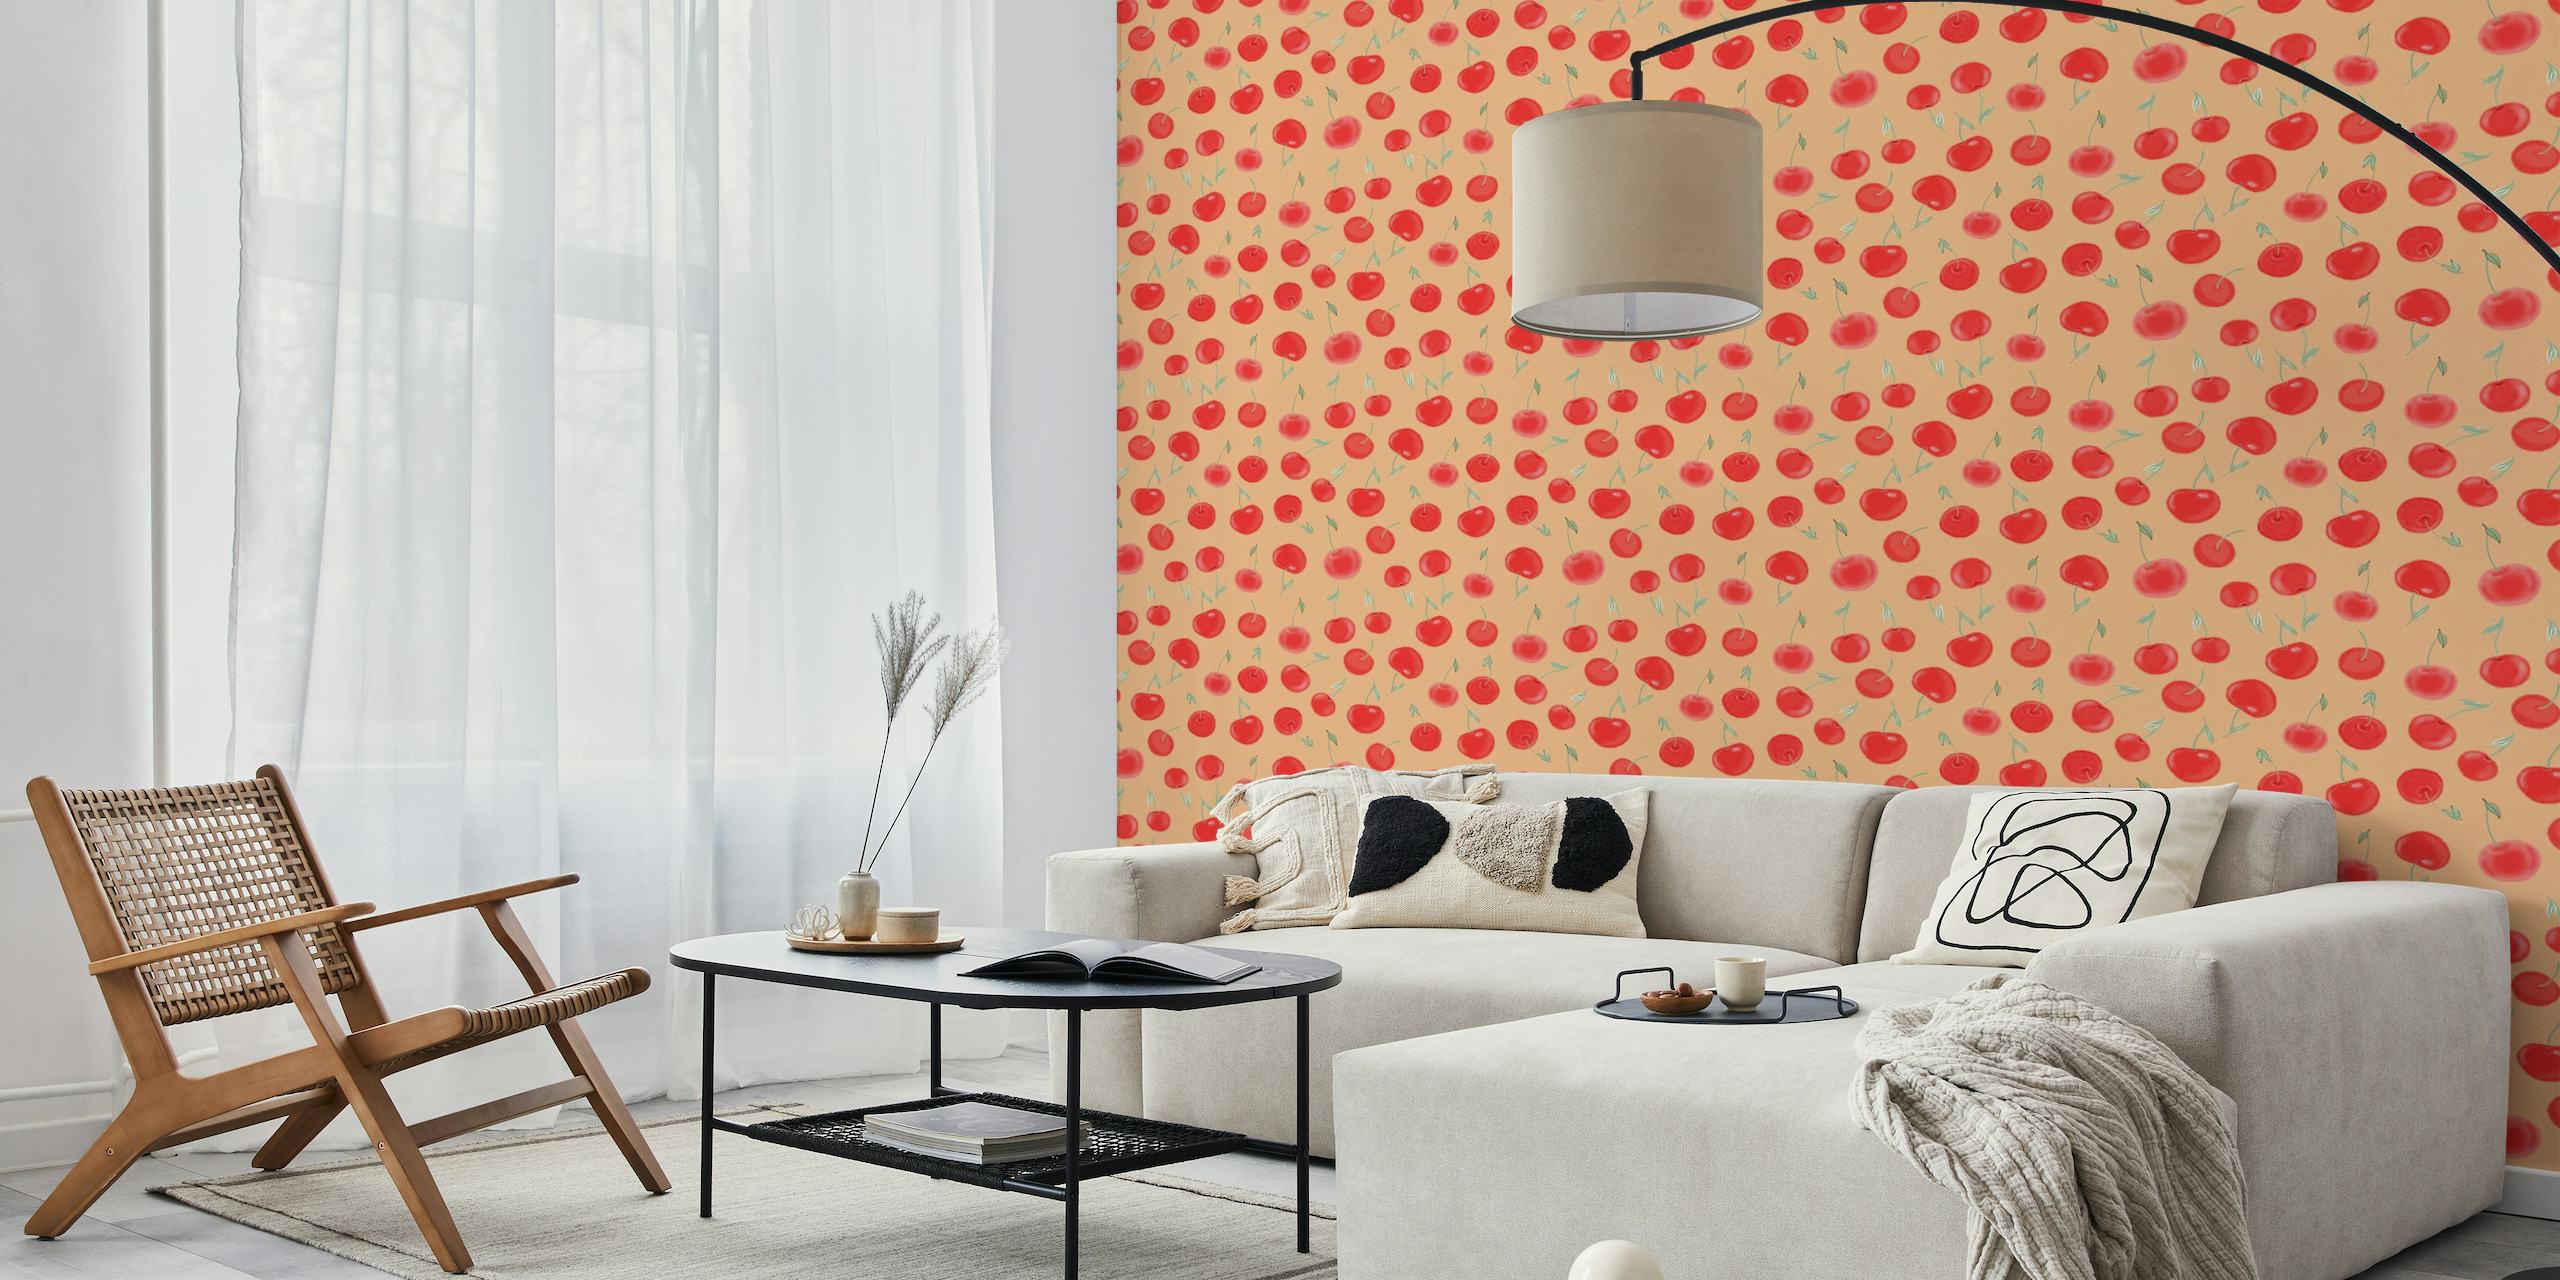 Orange colored cherry pattern wallpaper